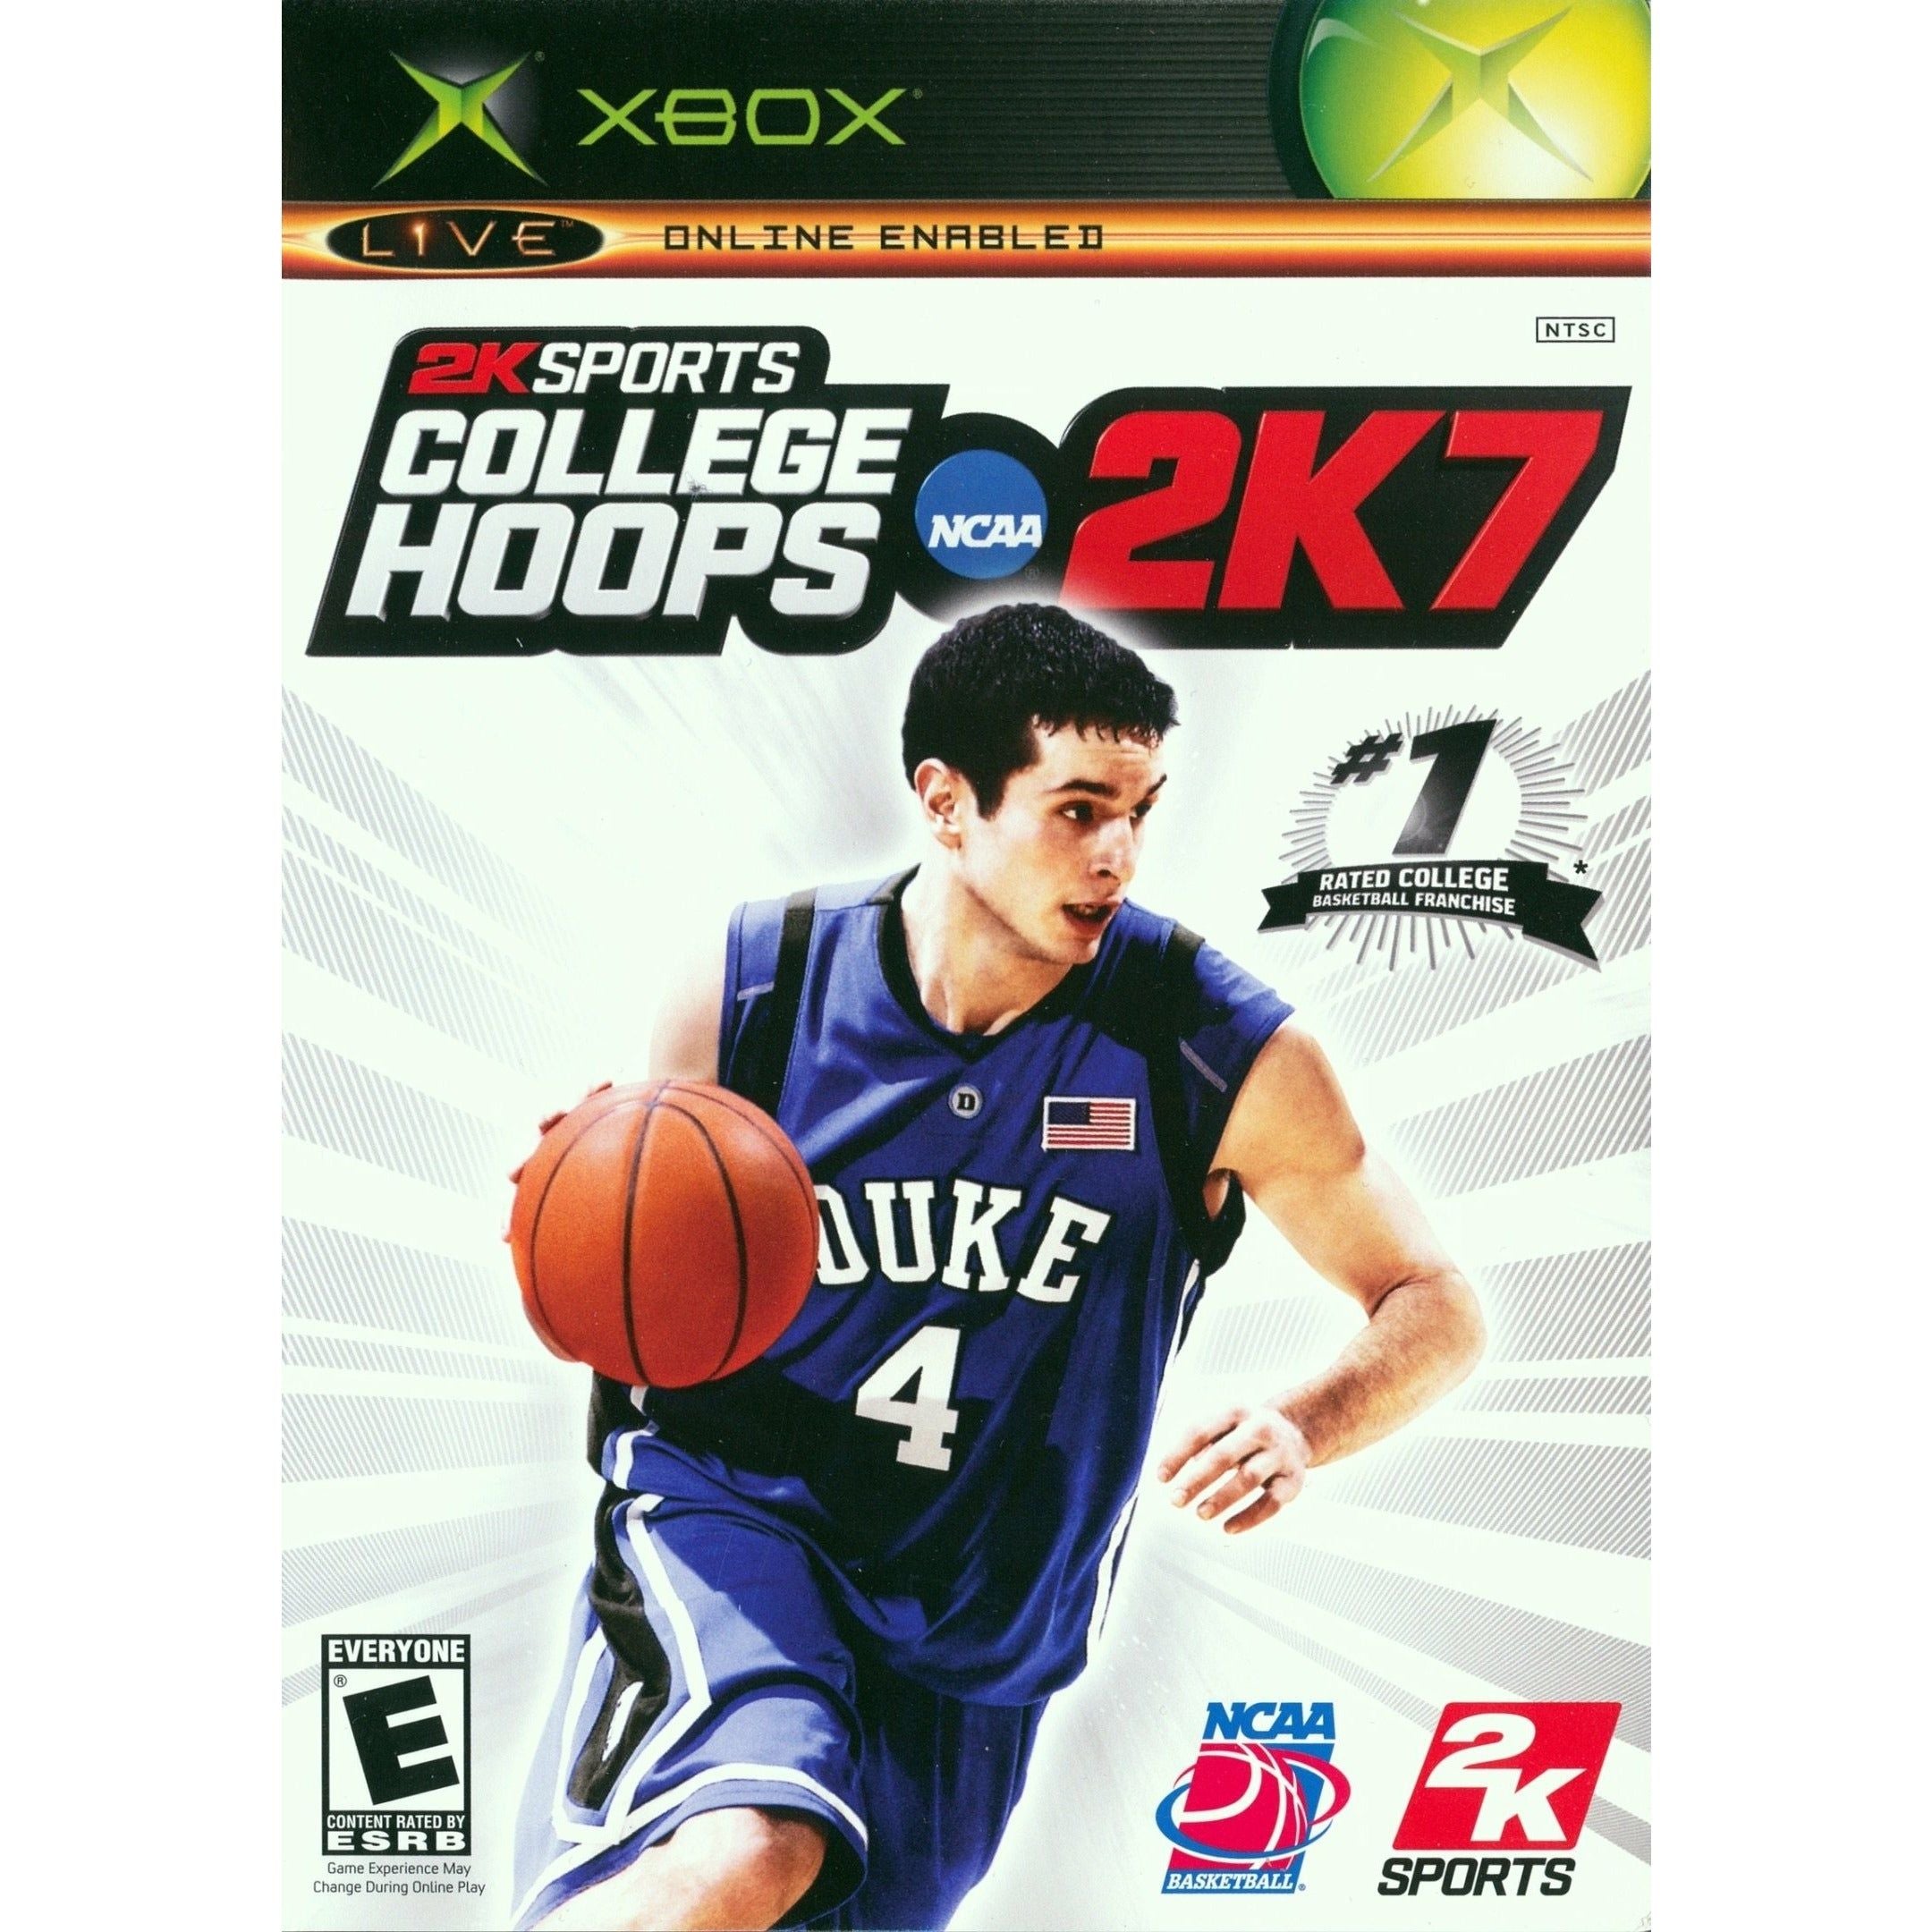 XBOX - College Hoops 2K7